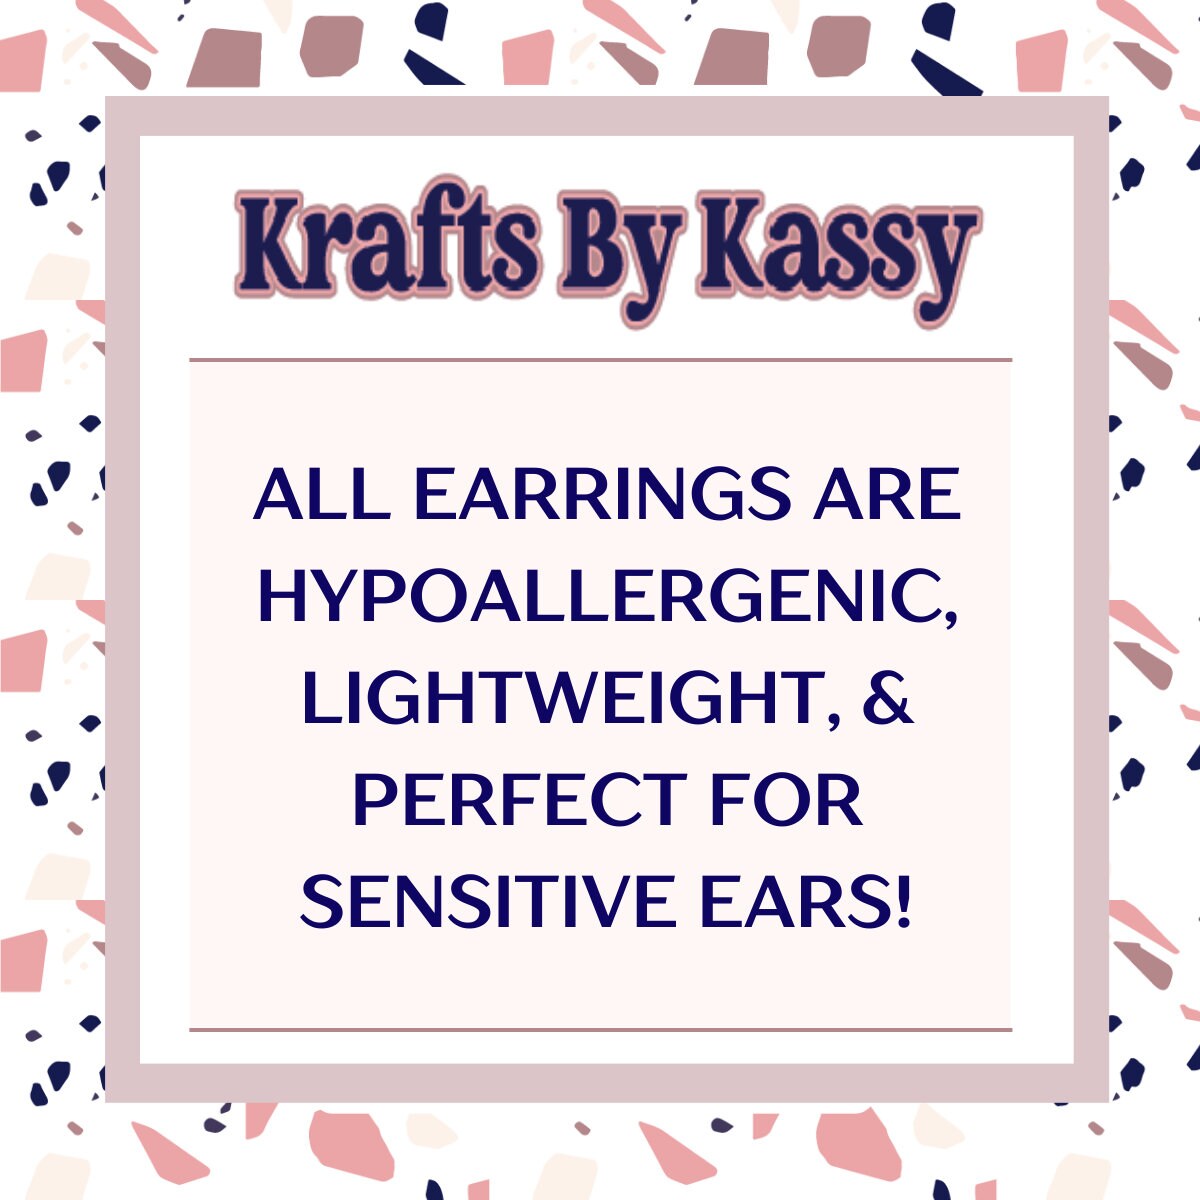 XO Acrylic Earrings, Valentine Jewelry, Fun Accessories, Statement Acrylic Earrings, Heart Acrylic Earrings, Pink Glitter